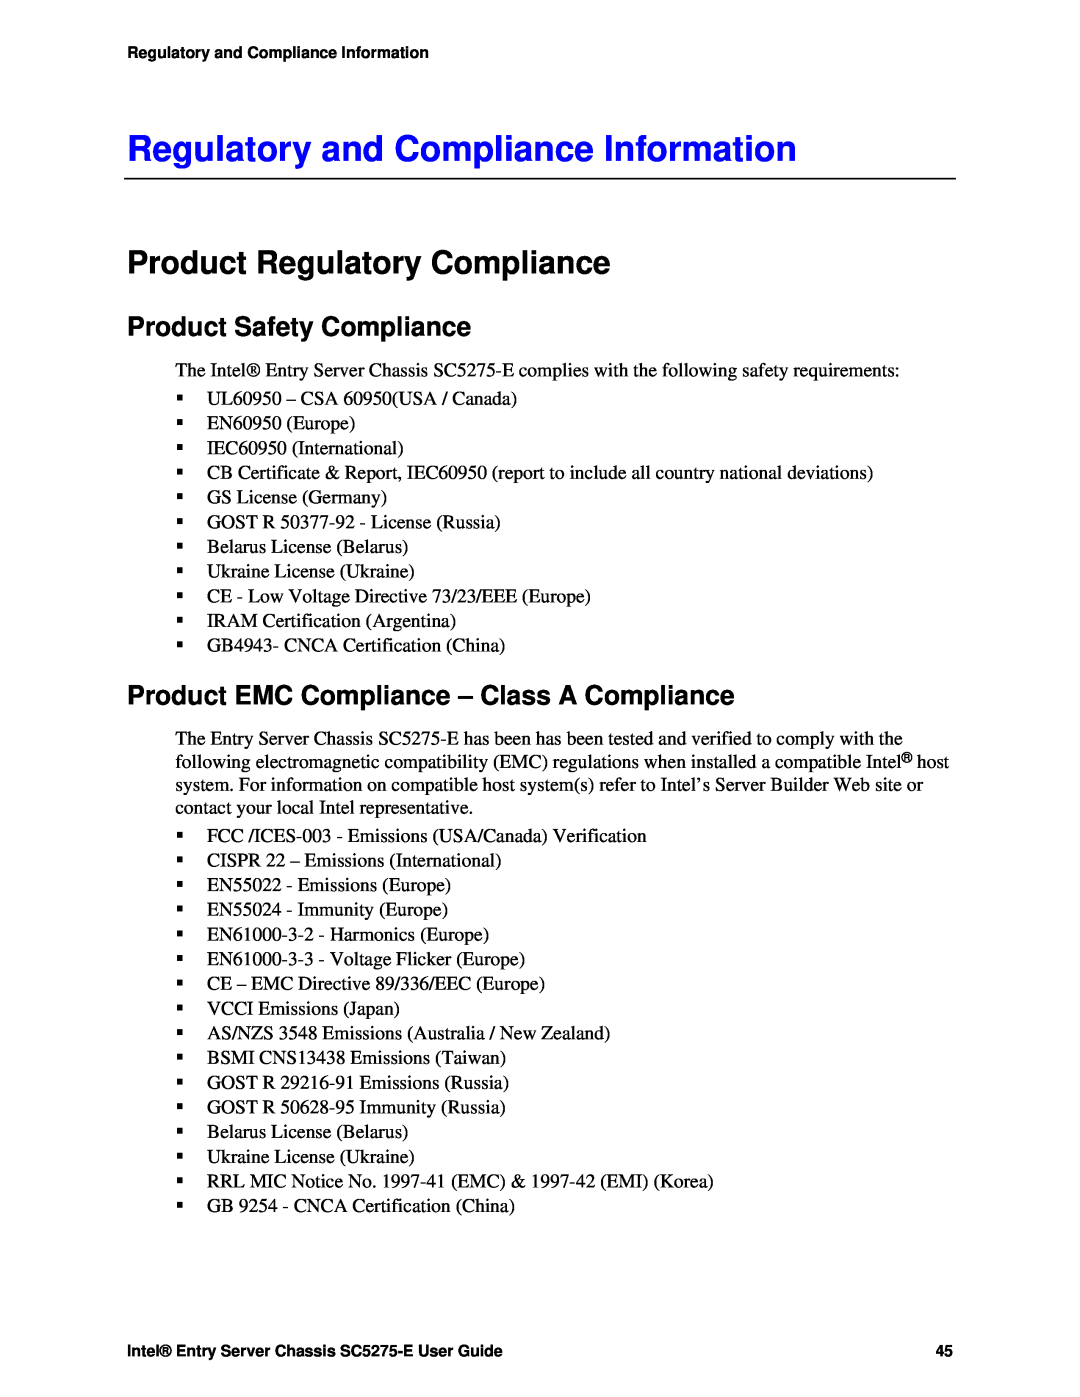 Intel C50277-001, SC5275-E Regulatory and Compliance Information, Product Regulatory Compliance, Product Safety Compliance 